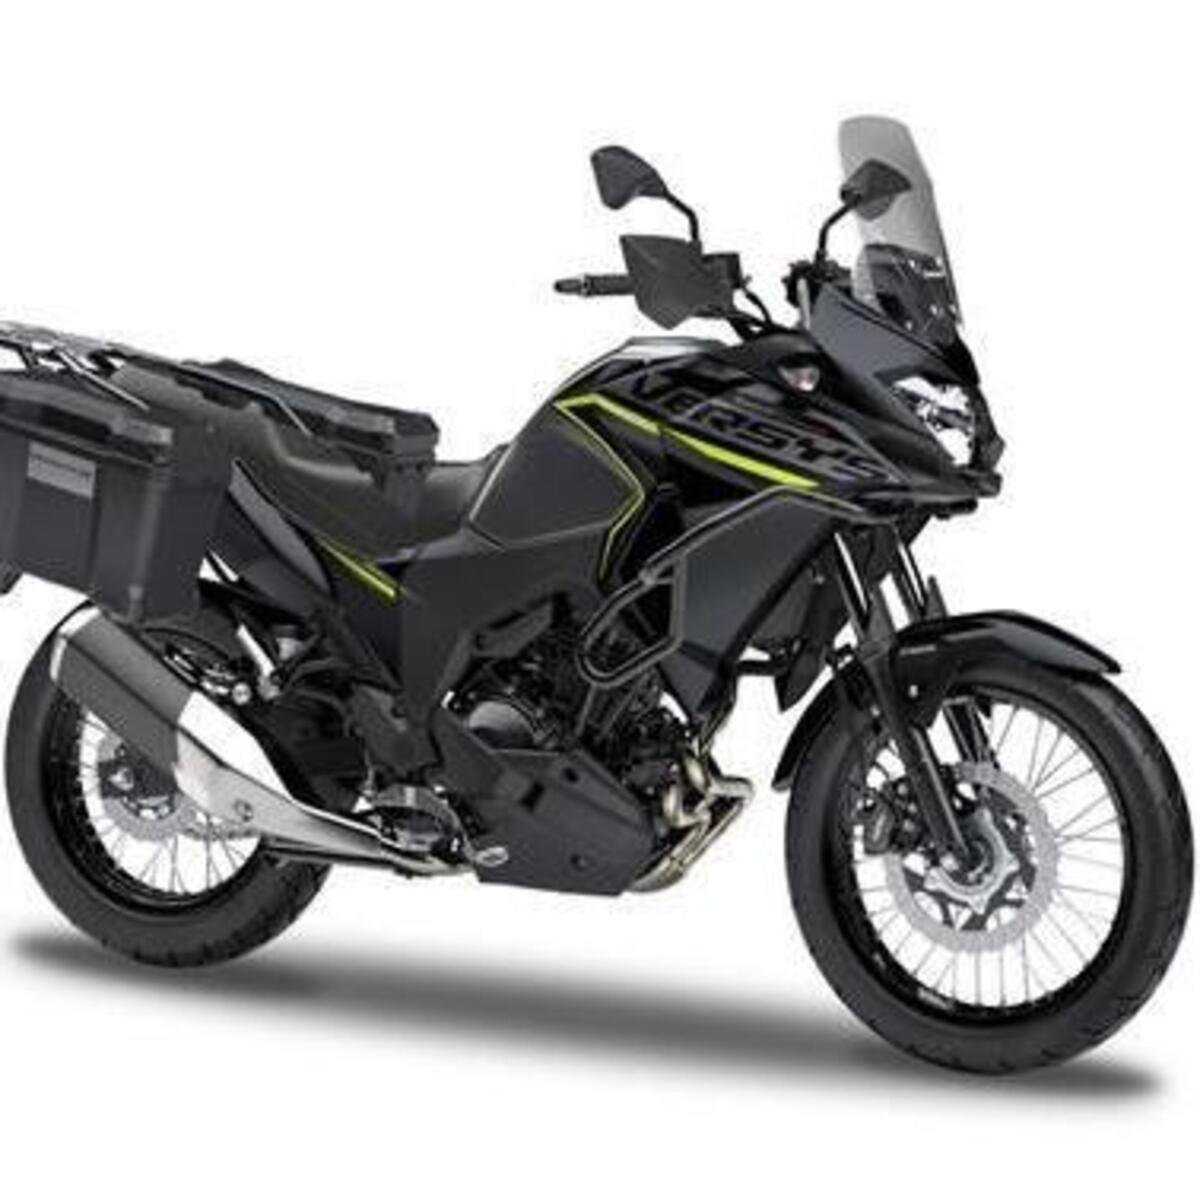 Kawasaki Versys-X 300 Adventure (2020)